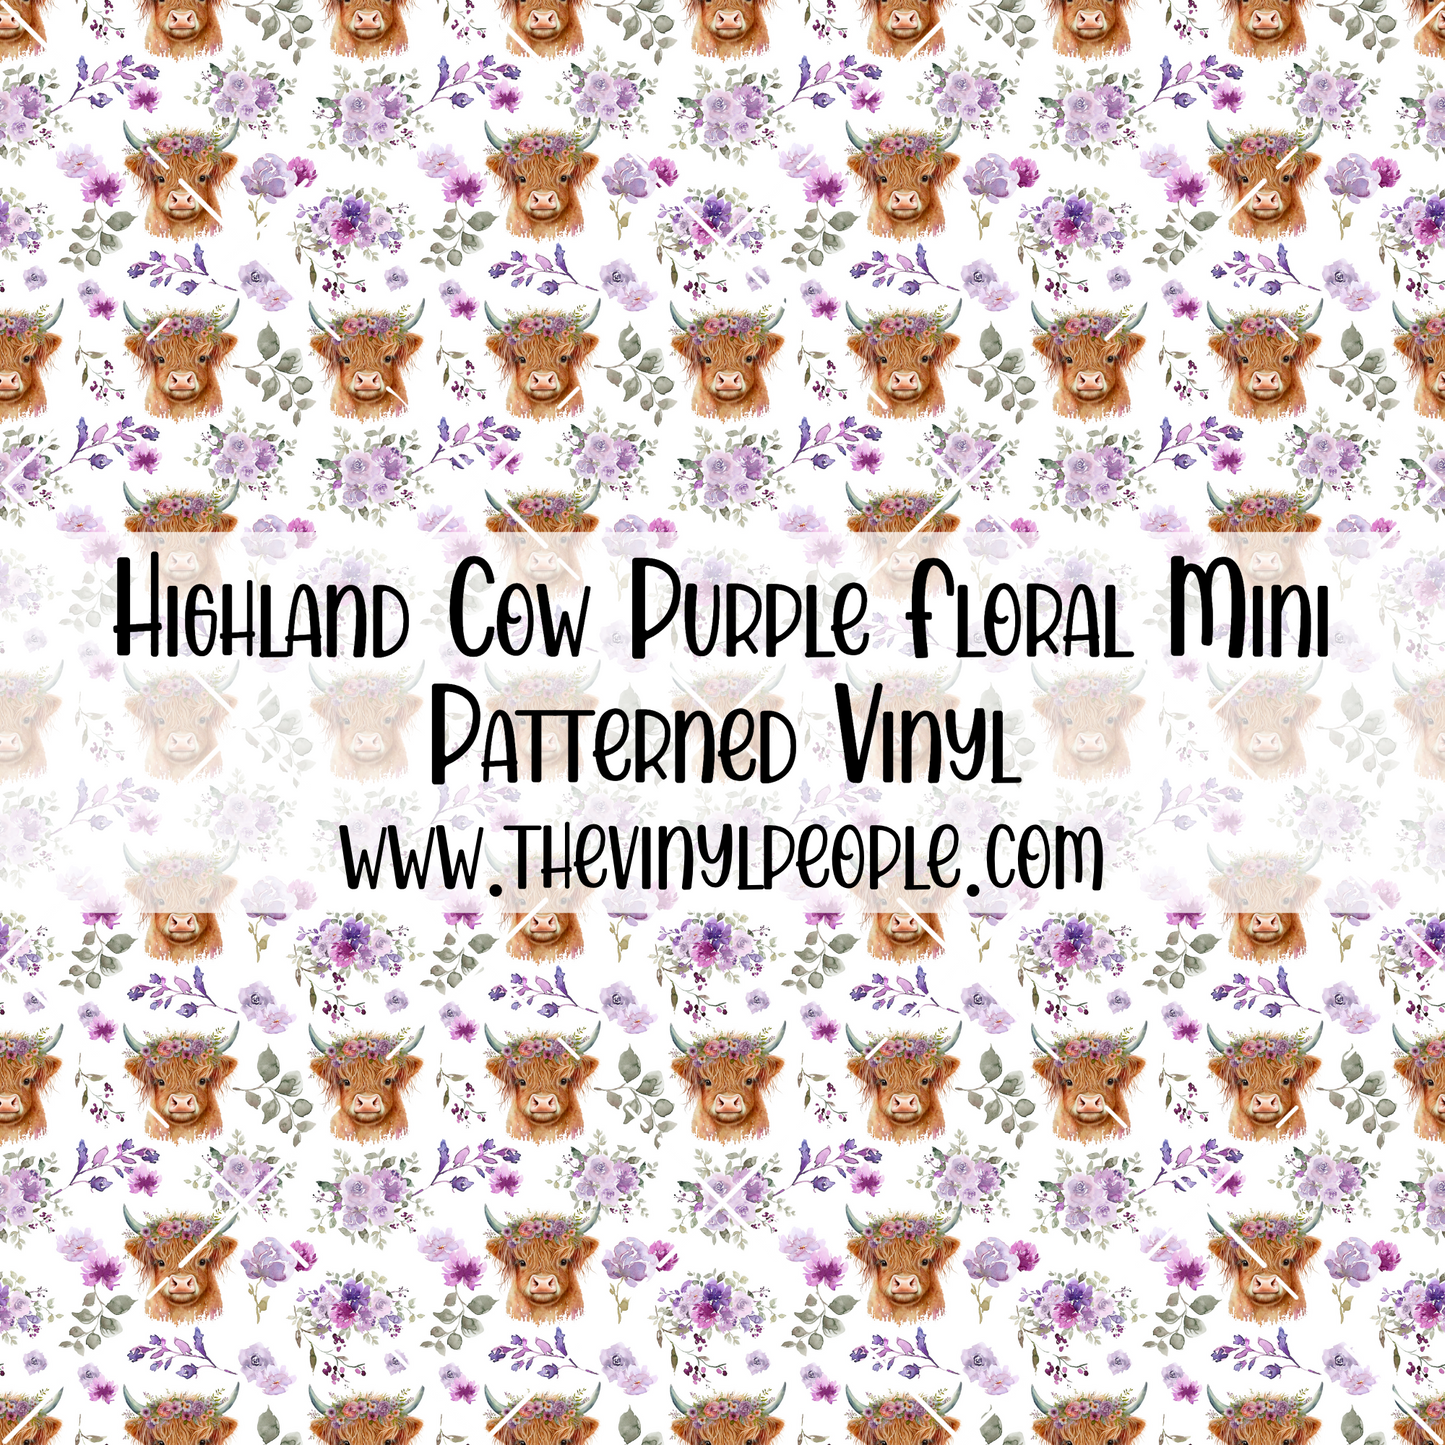 Highland Cow Purple Floral Patterned Vinyl